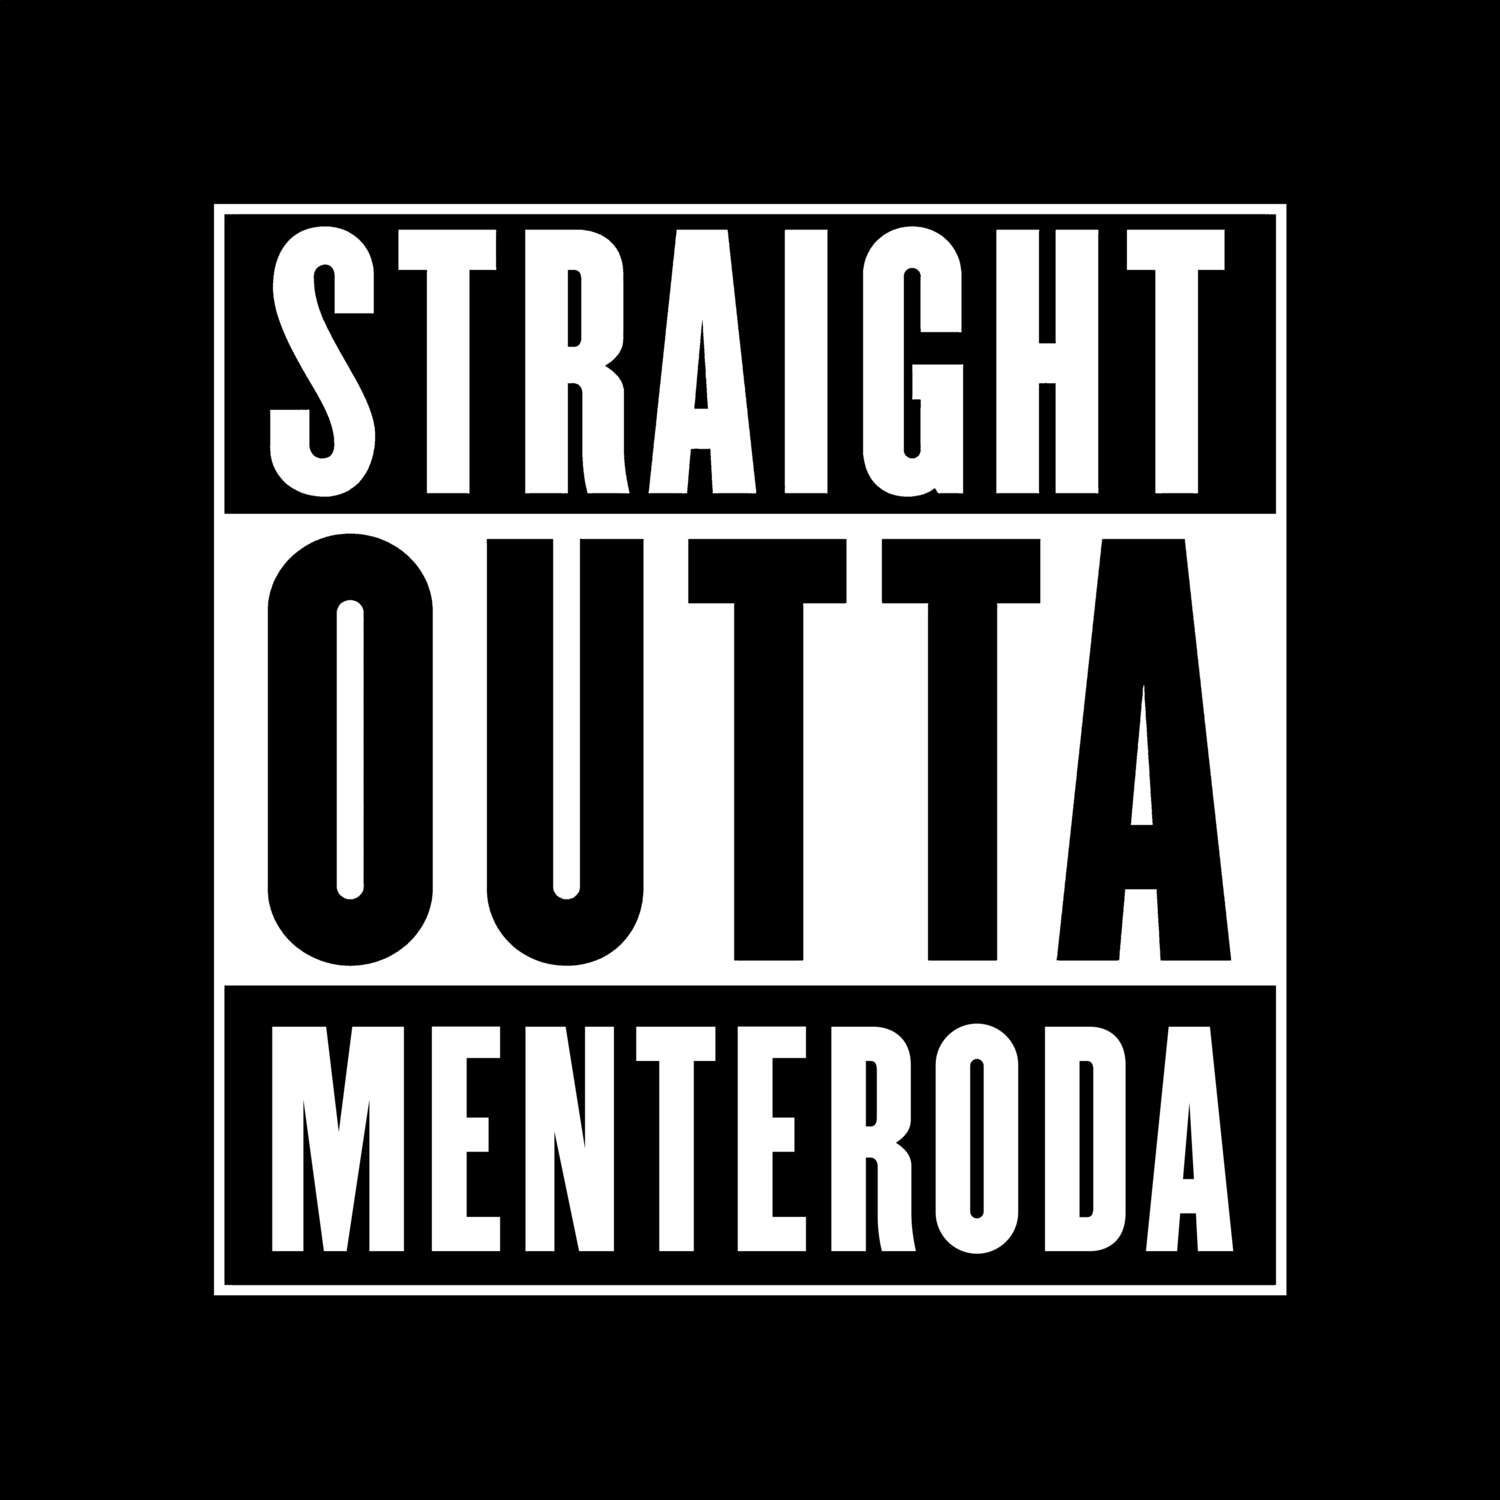 Menteroda T-Shirt »Straight Outta«